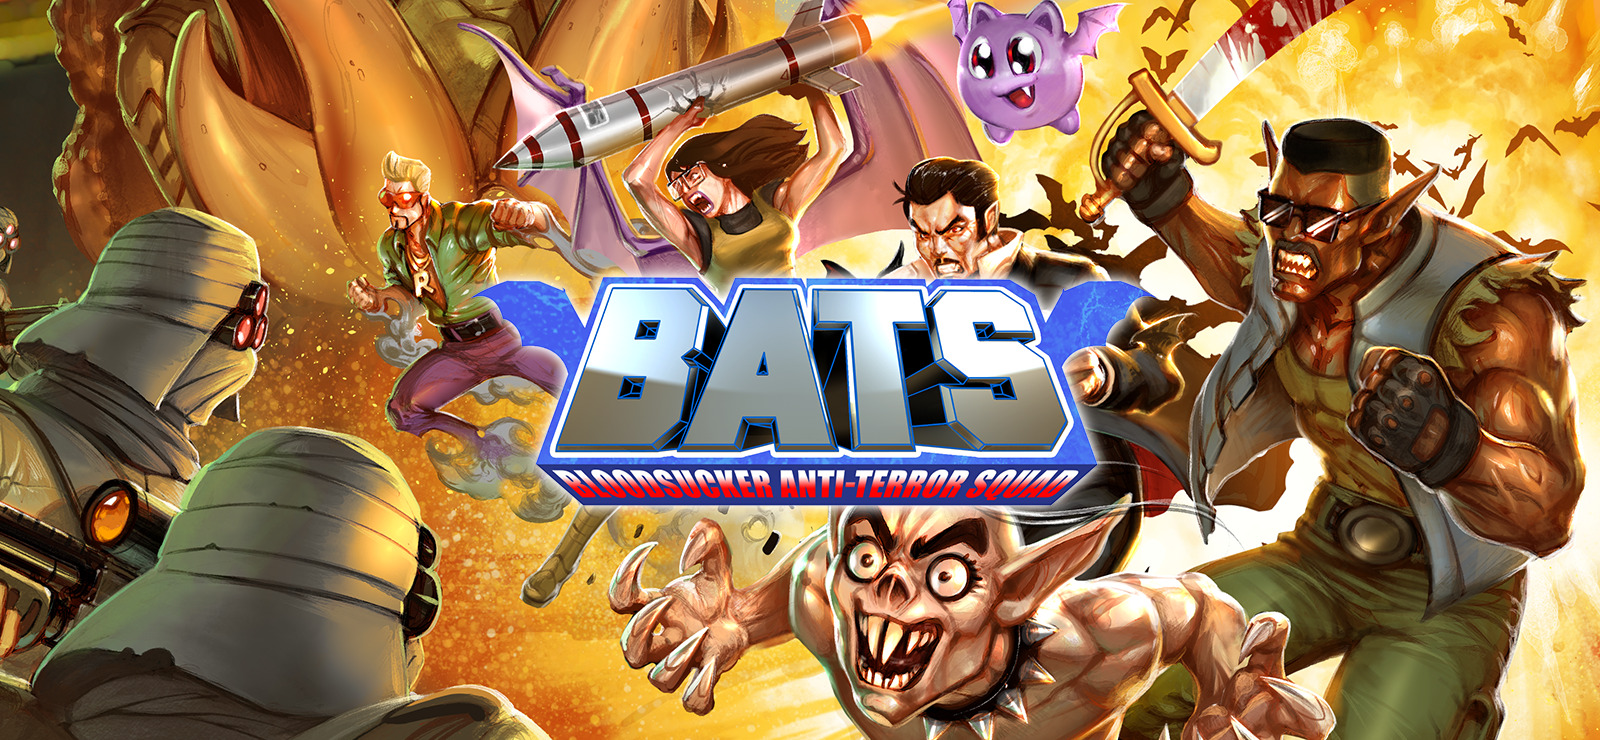 BATS: Bloodsucker Anti-Terror Squad Free Download (v1.0) » GOG ...